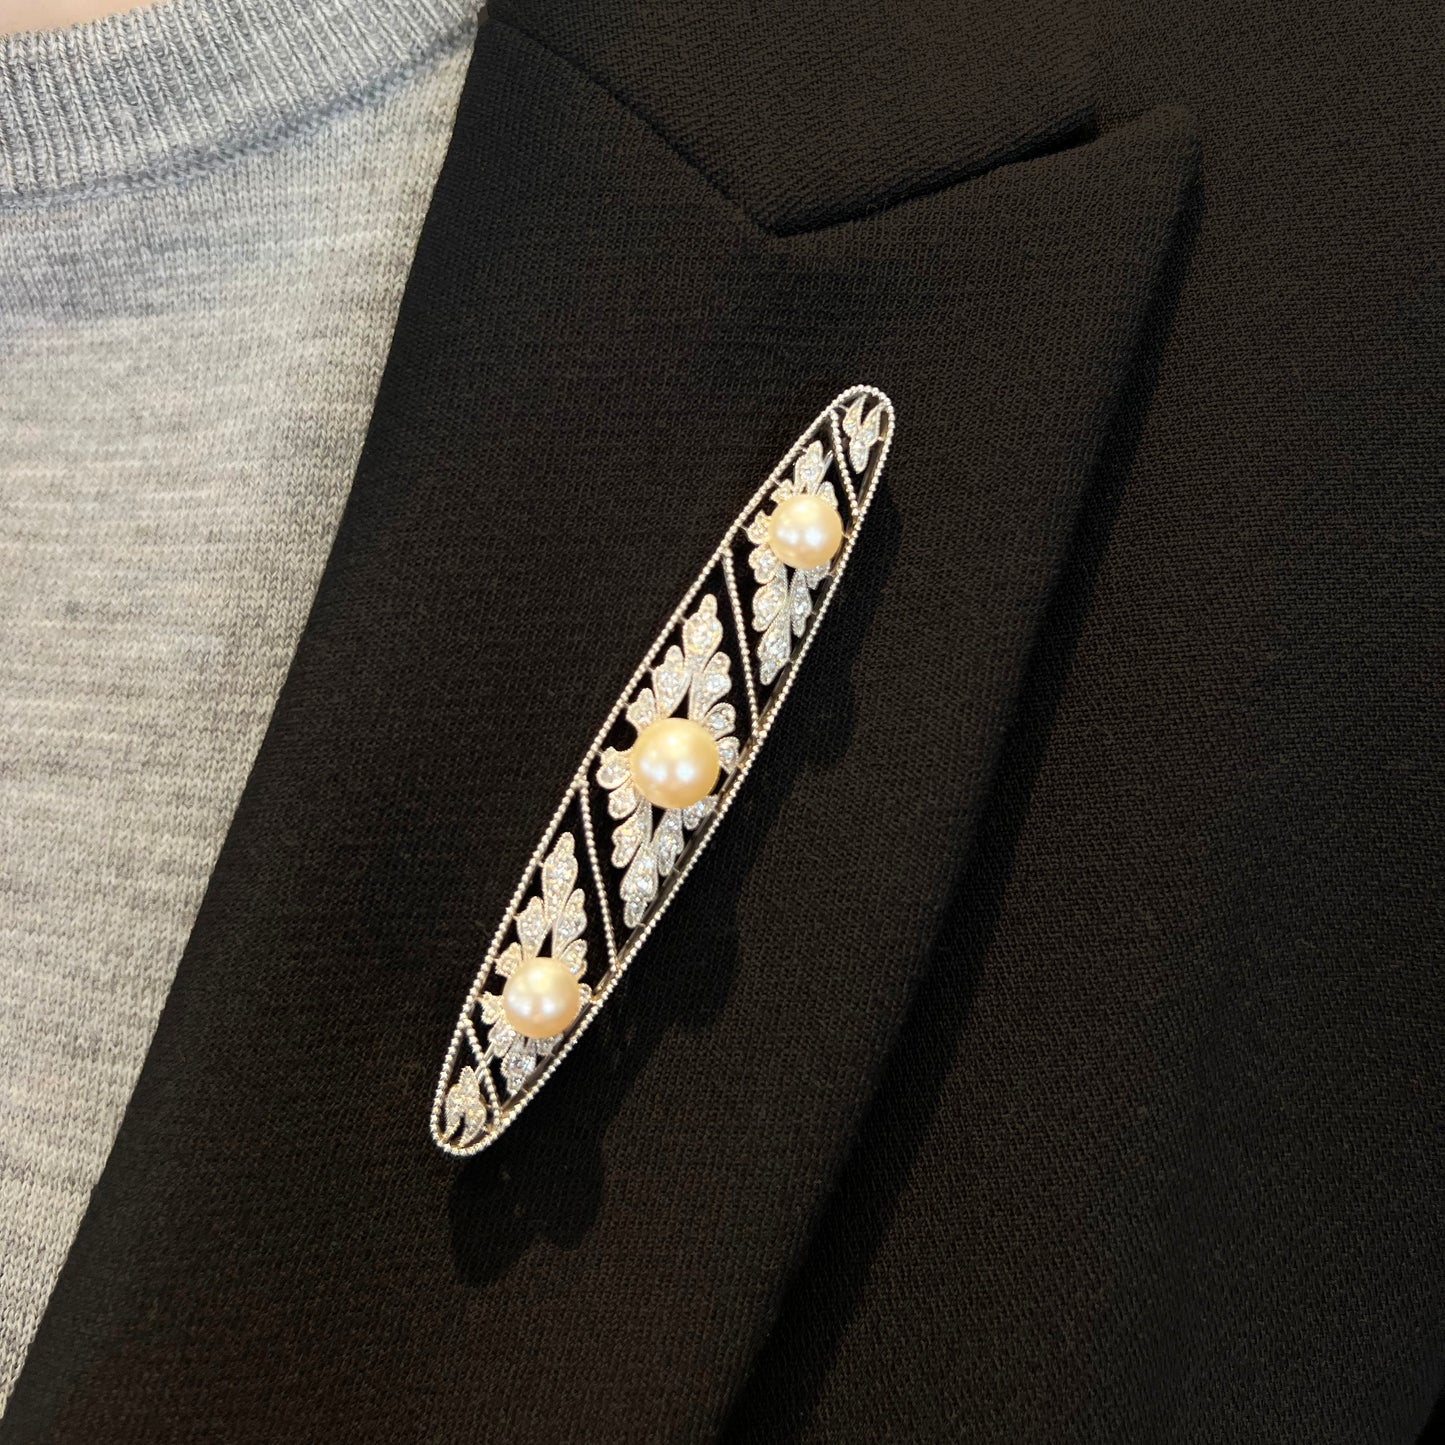 Edwardian Platinum Diamond & Pearl Brooch worn on black collar